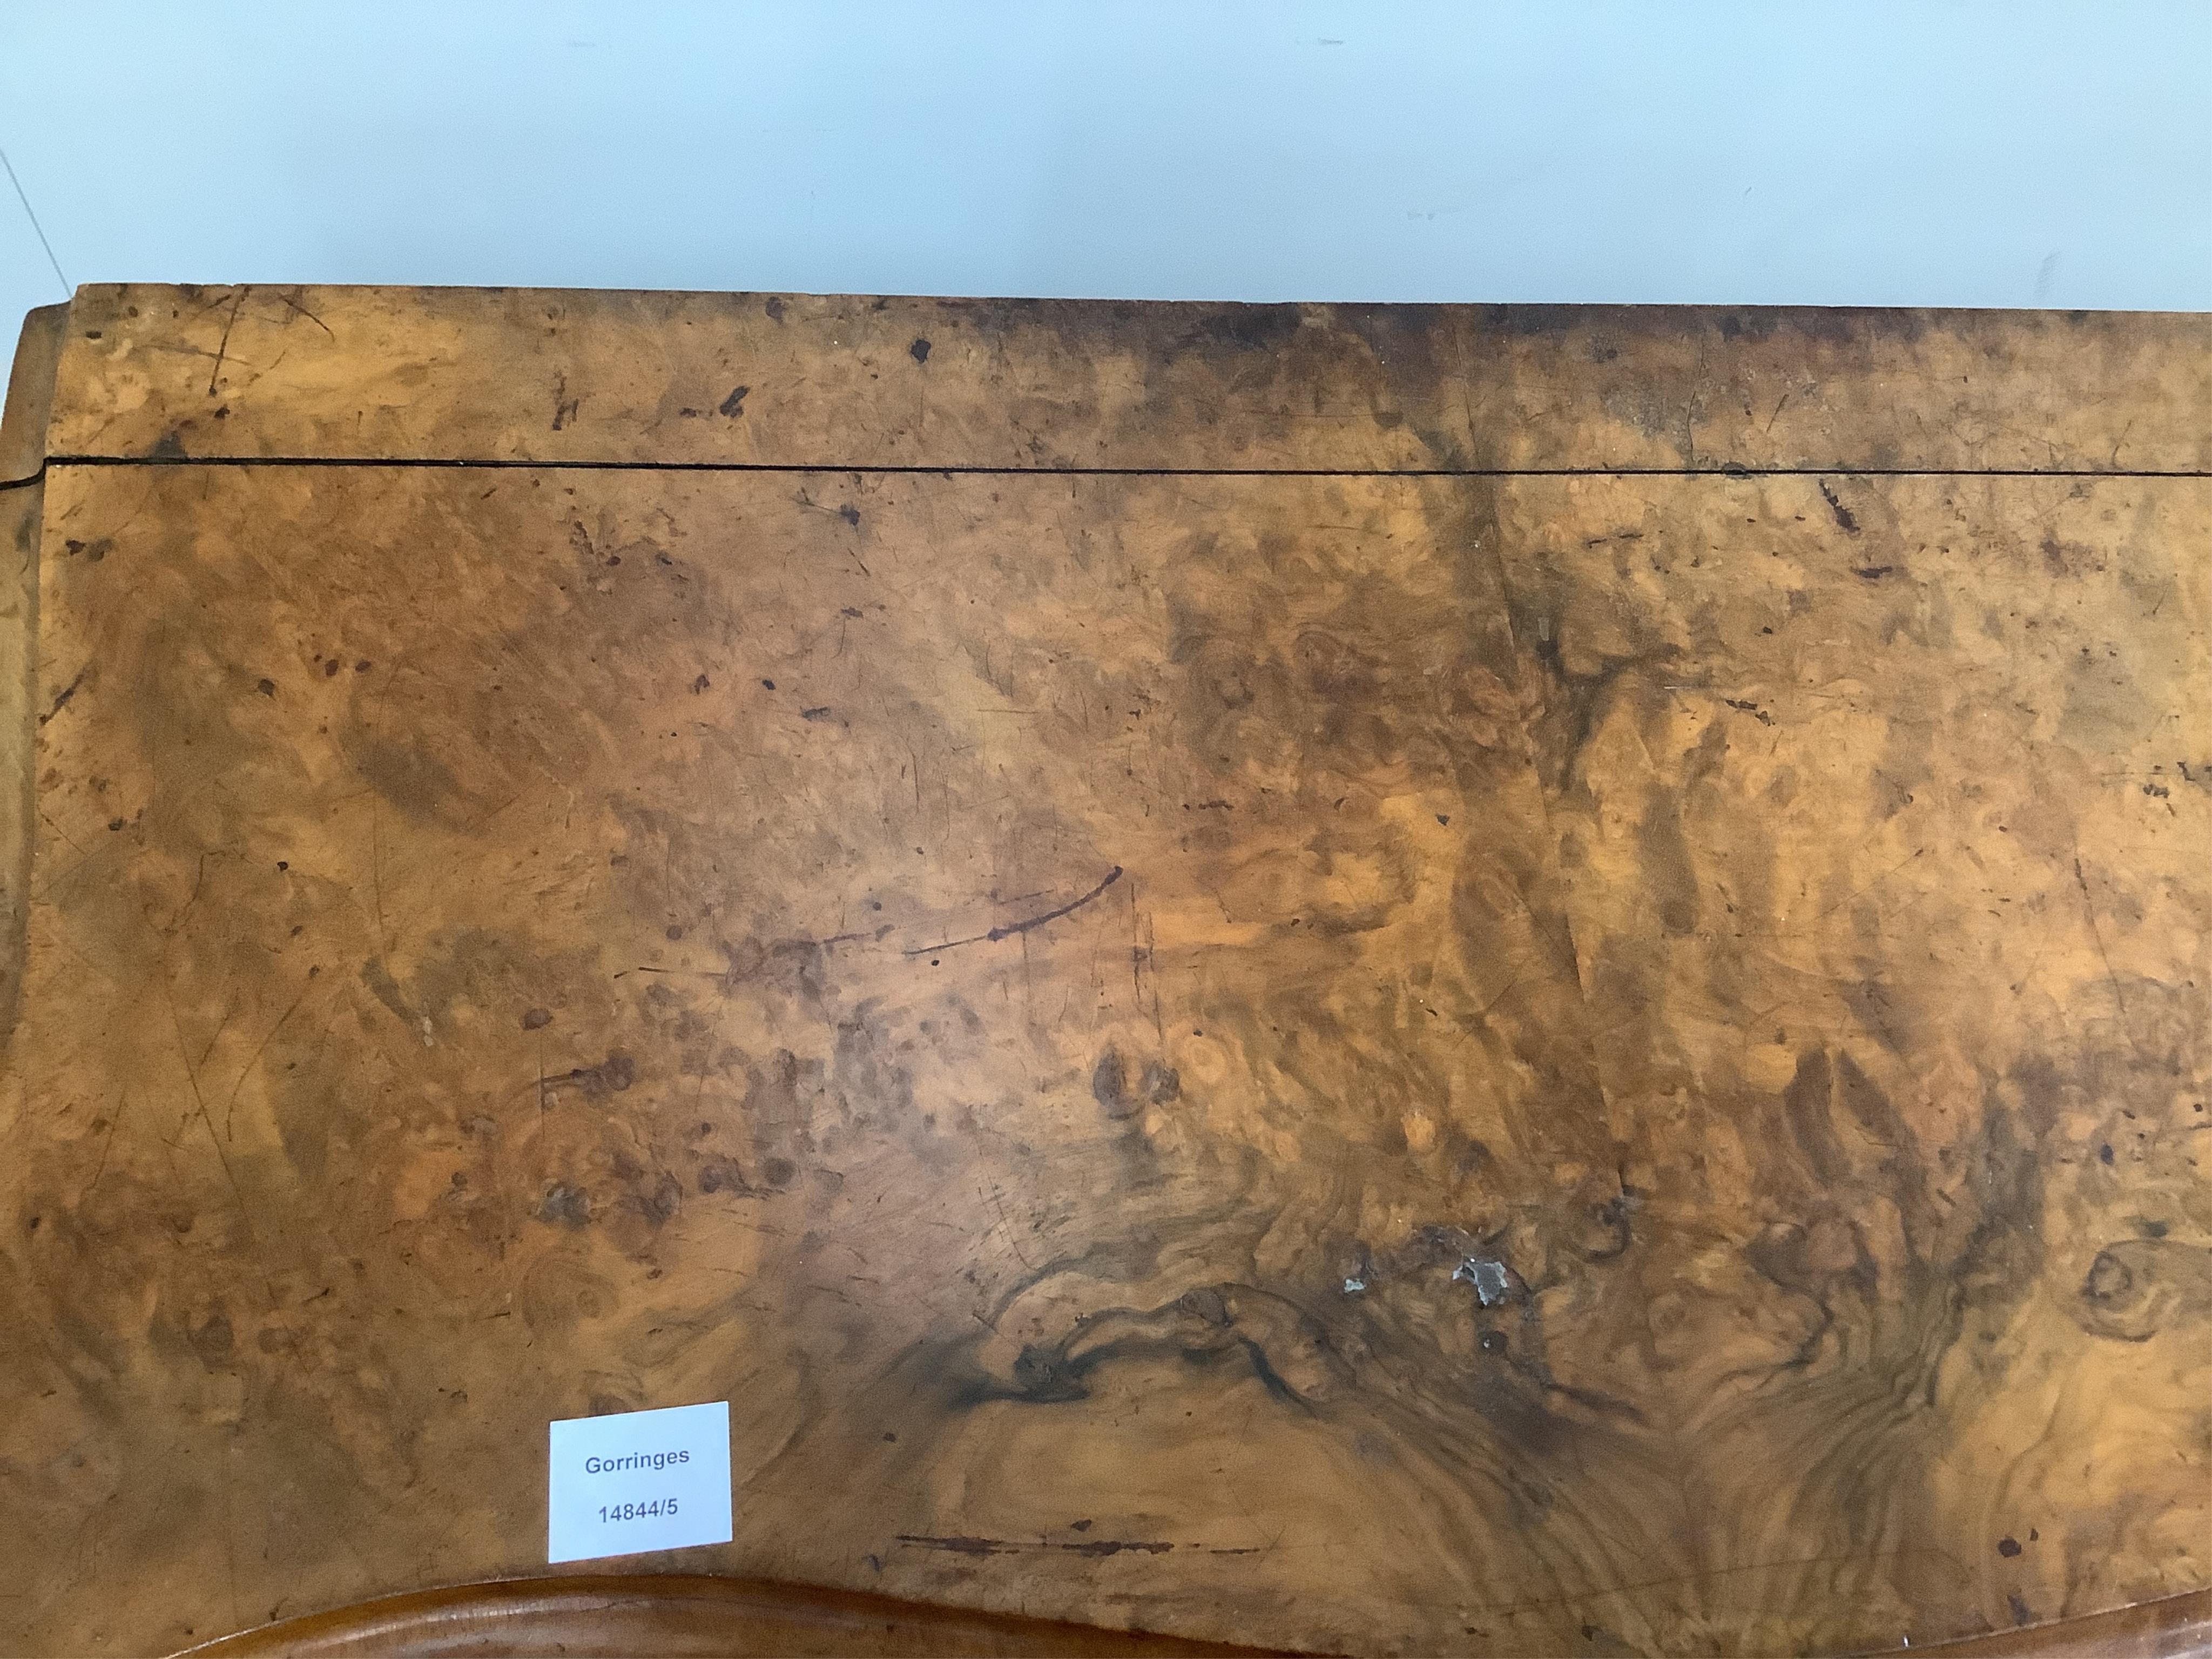 A Victorian burr walnut folding card table, width 92cm, depth 46cm, height 71cm. Condition - poor